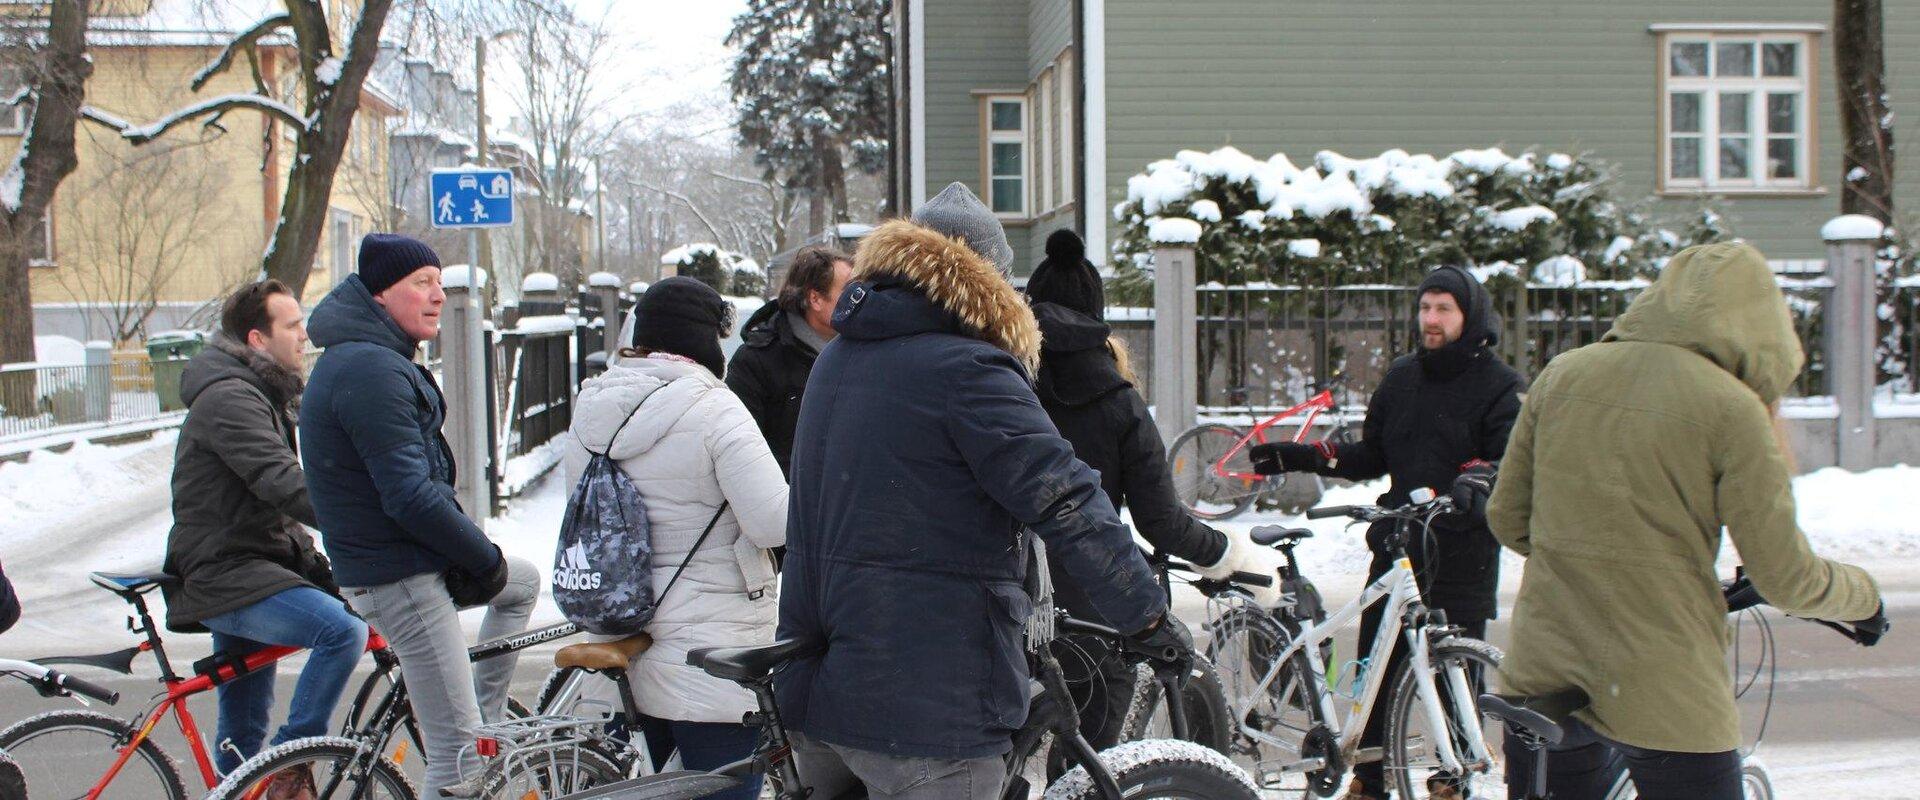 Tallinn Winter Bike Tour with Coffe Stop.